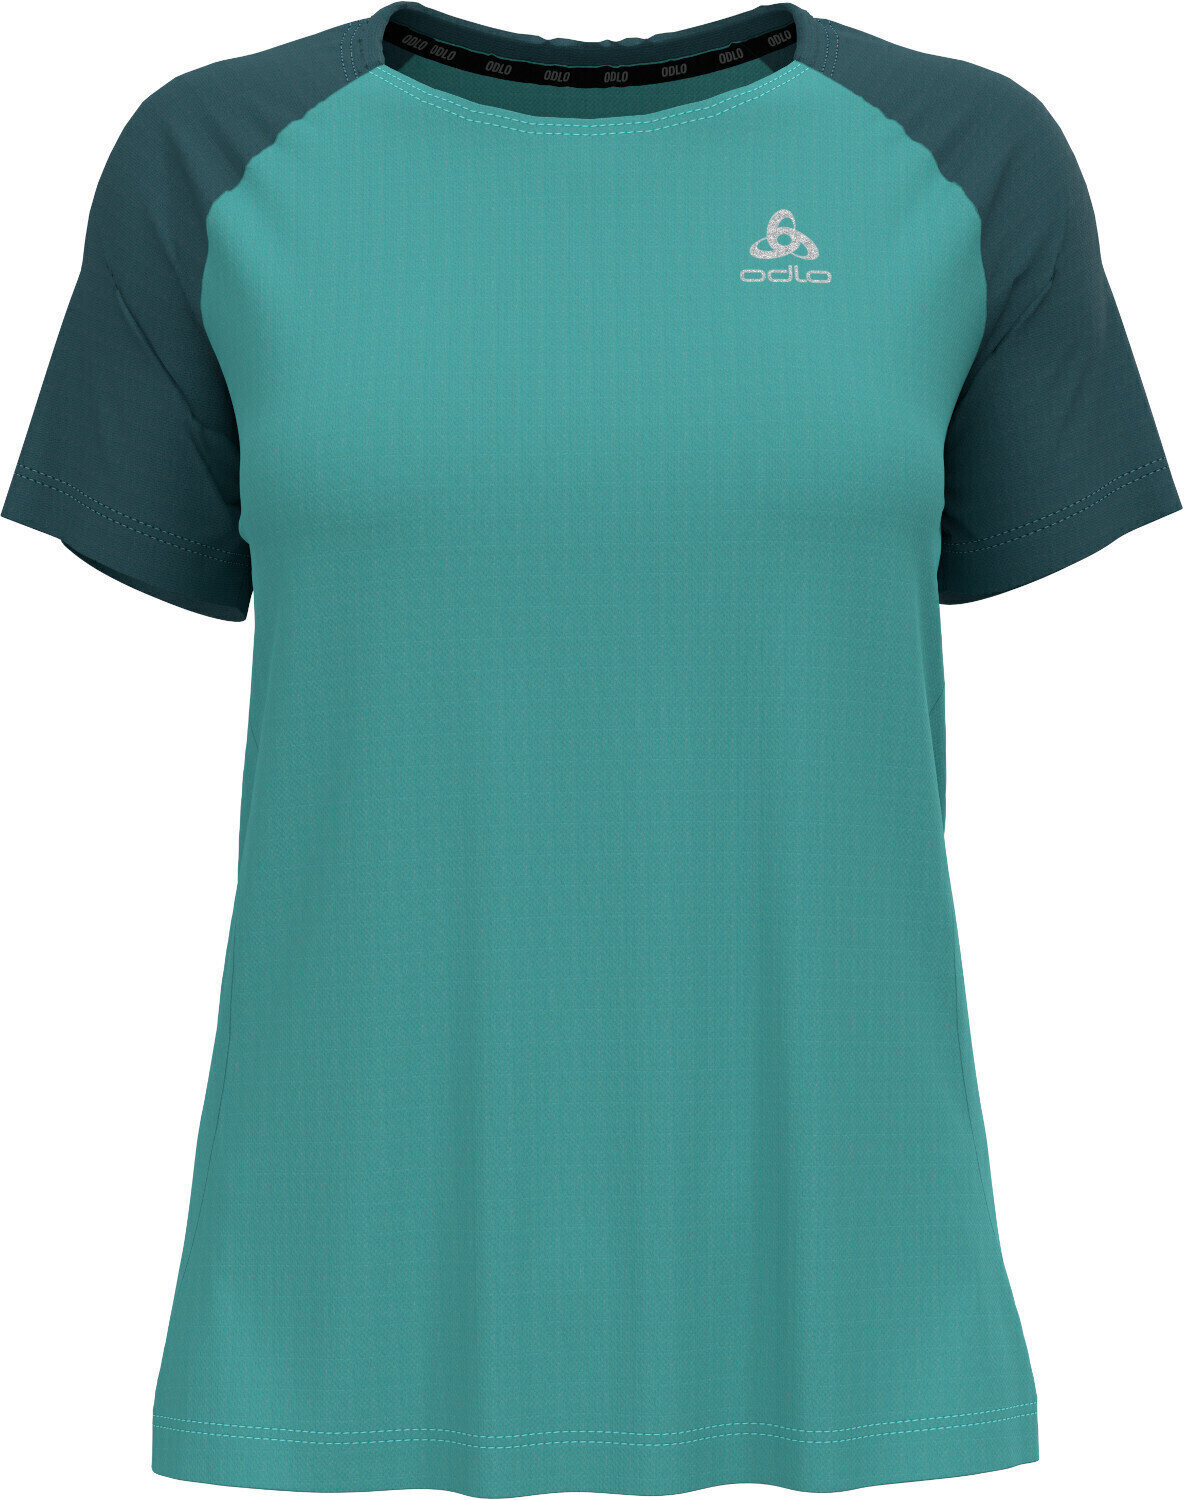 Running t-shirt with short sleeves
 Odlo Essential T-Shirt Jaded/Balsam L Running t-shirt with short sleeves